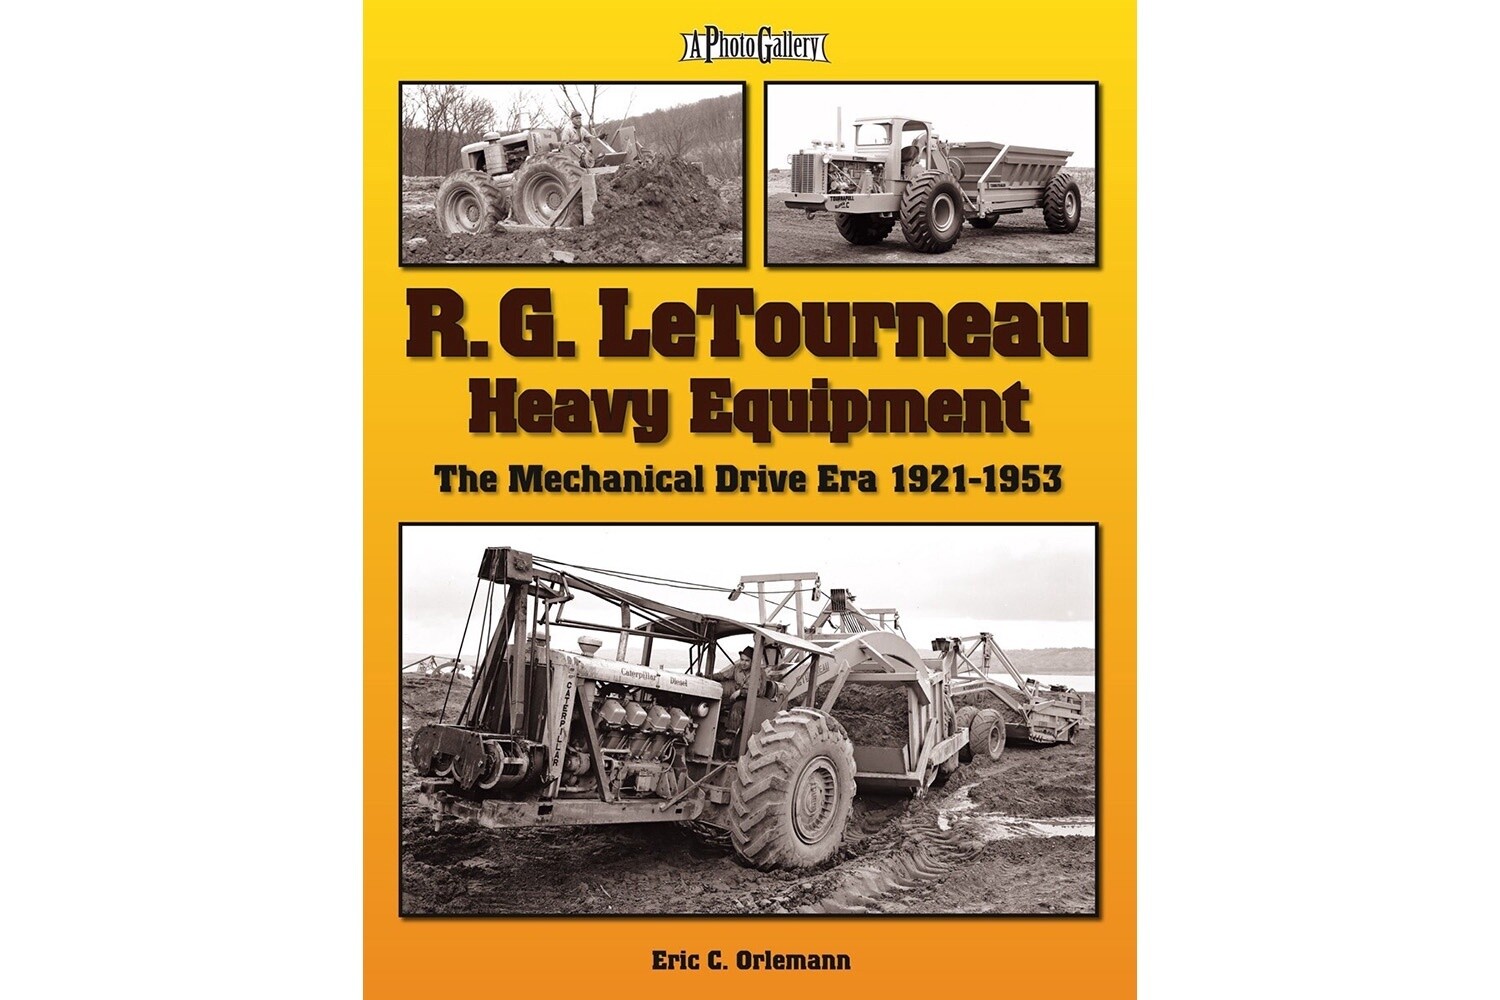 R.G. LeTourneau Heavy Equip - 1921-1953